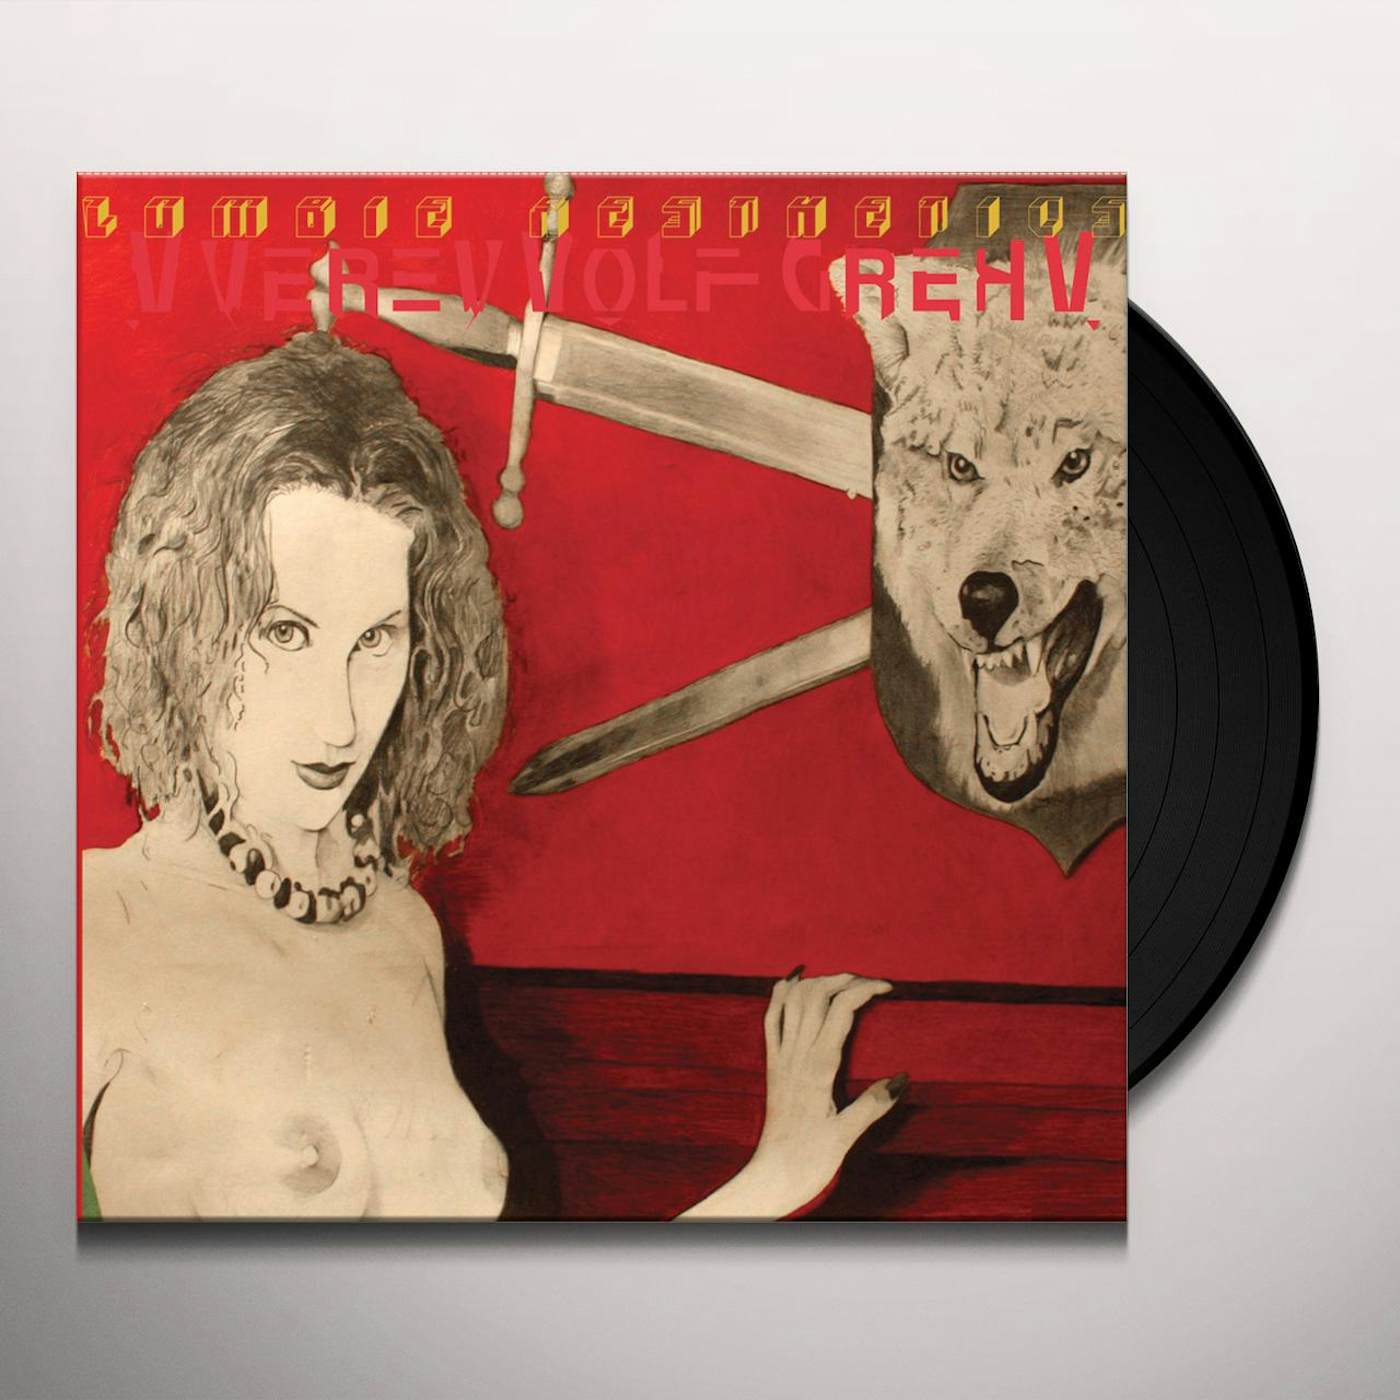 Vverevvolf Grehv Zombie Aesthetics Vinyl Record